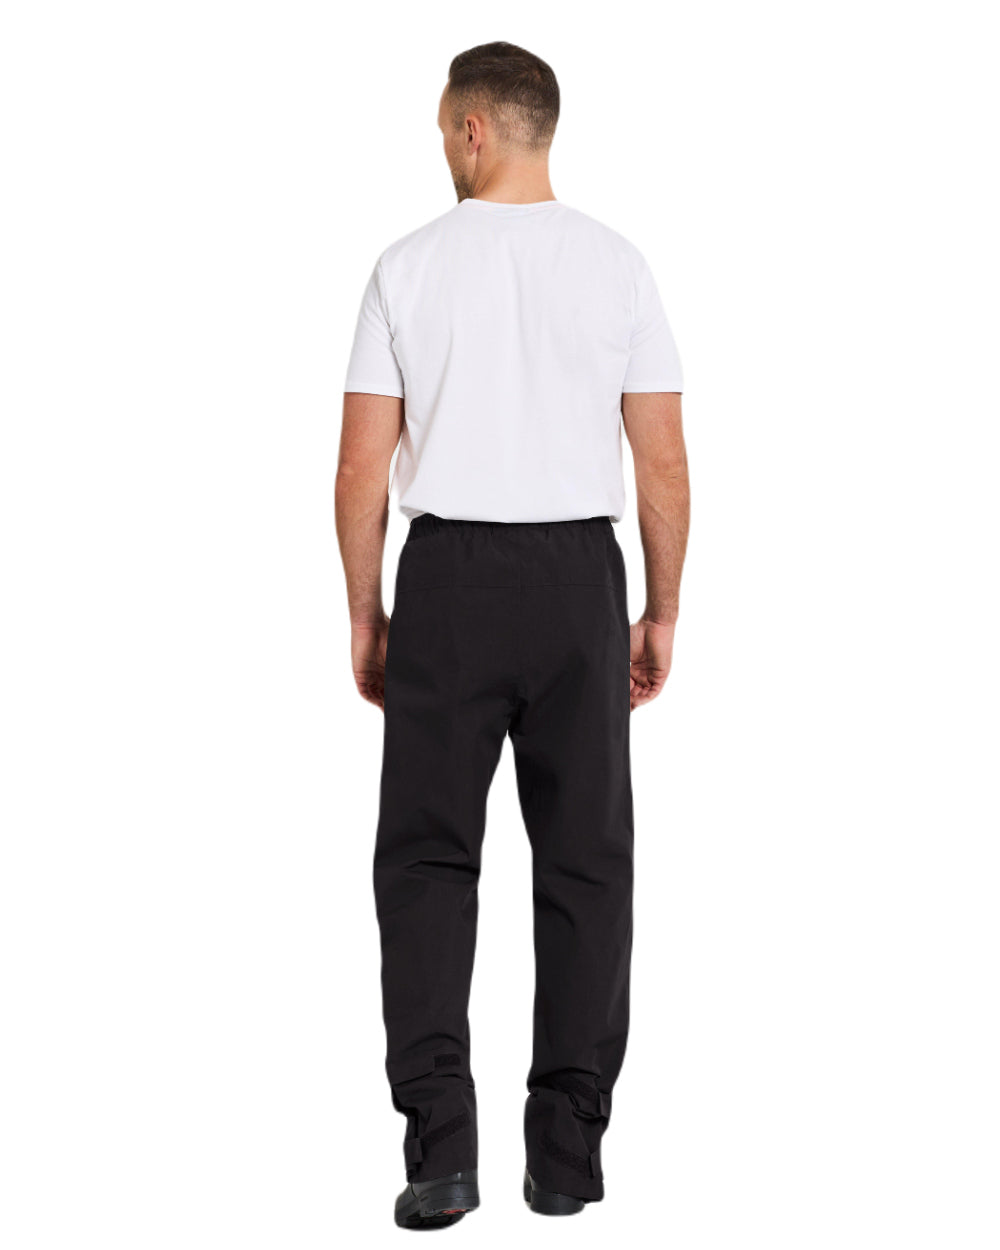 Black Coloured Didriksons Derek Unisex Pants On A White Background 